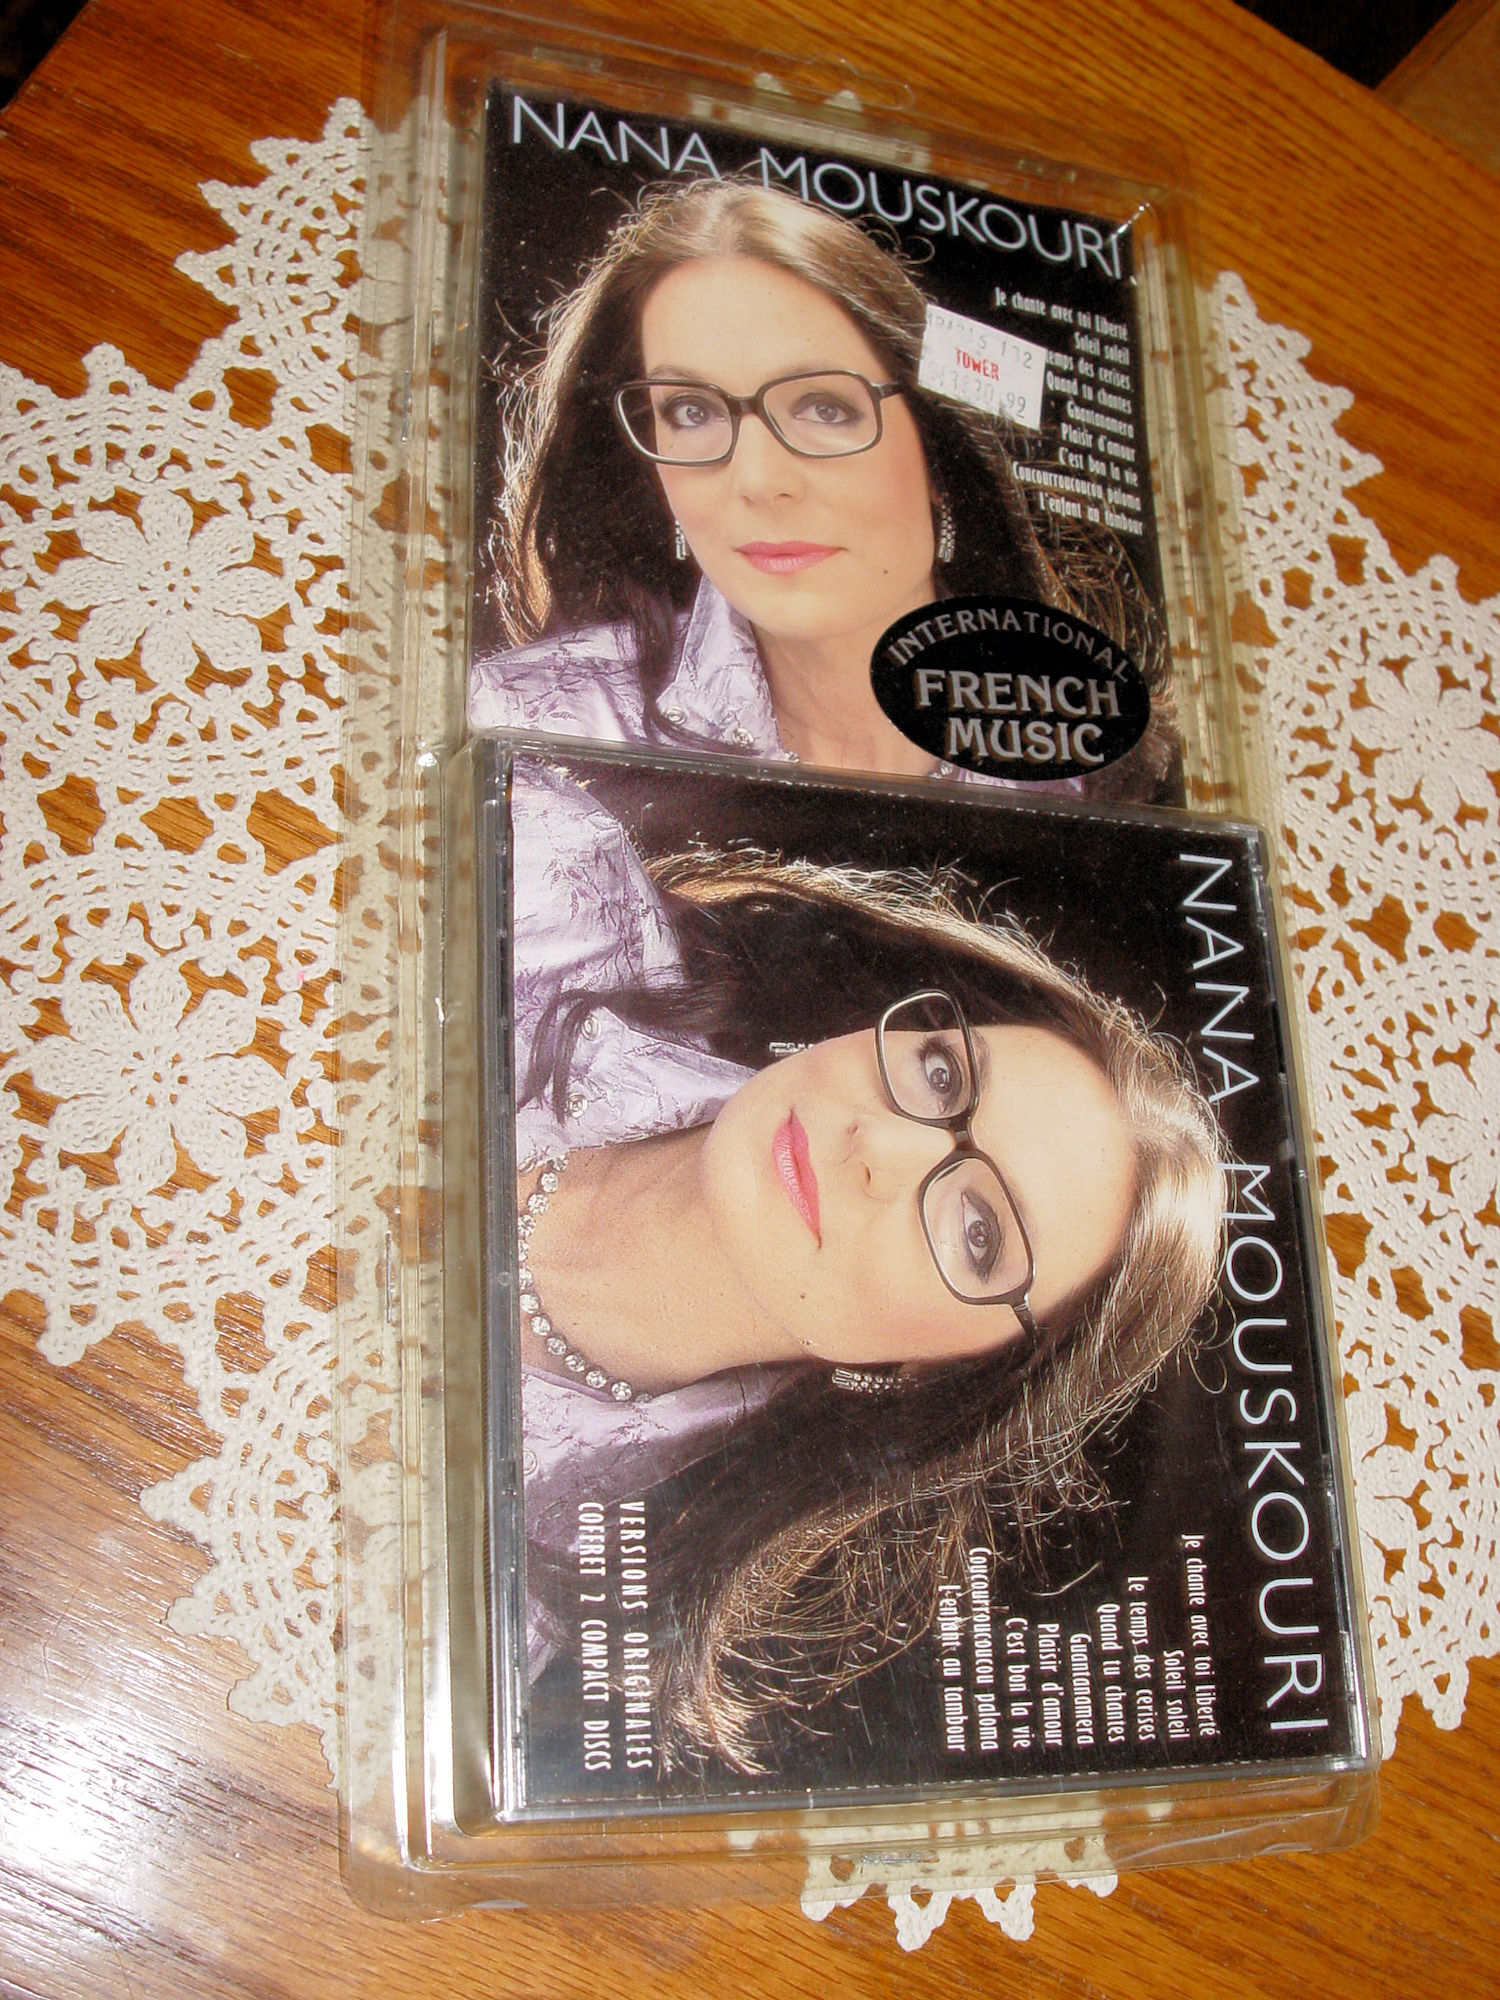 Nana Mouskouri NOS CD's
                                        Unopened International French
                                        Music